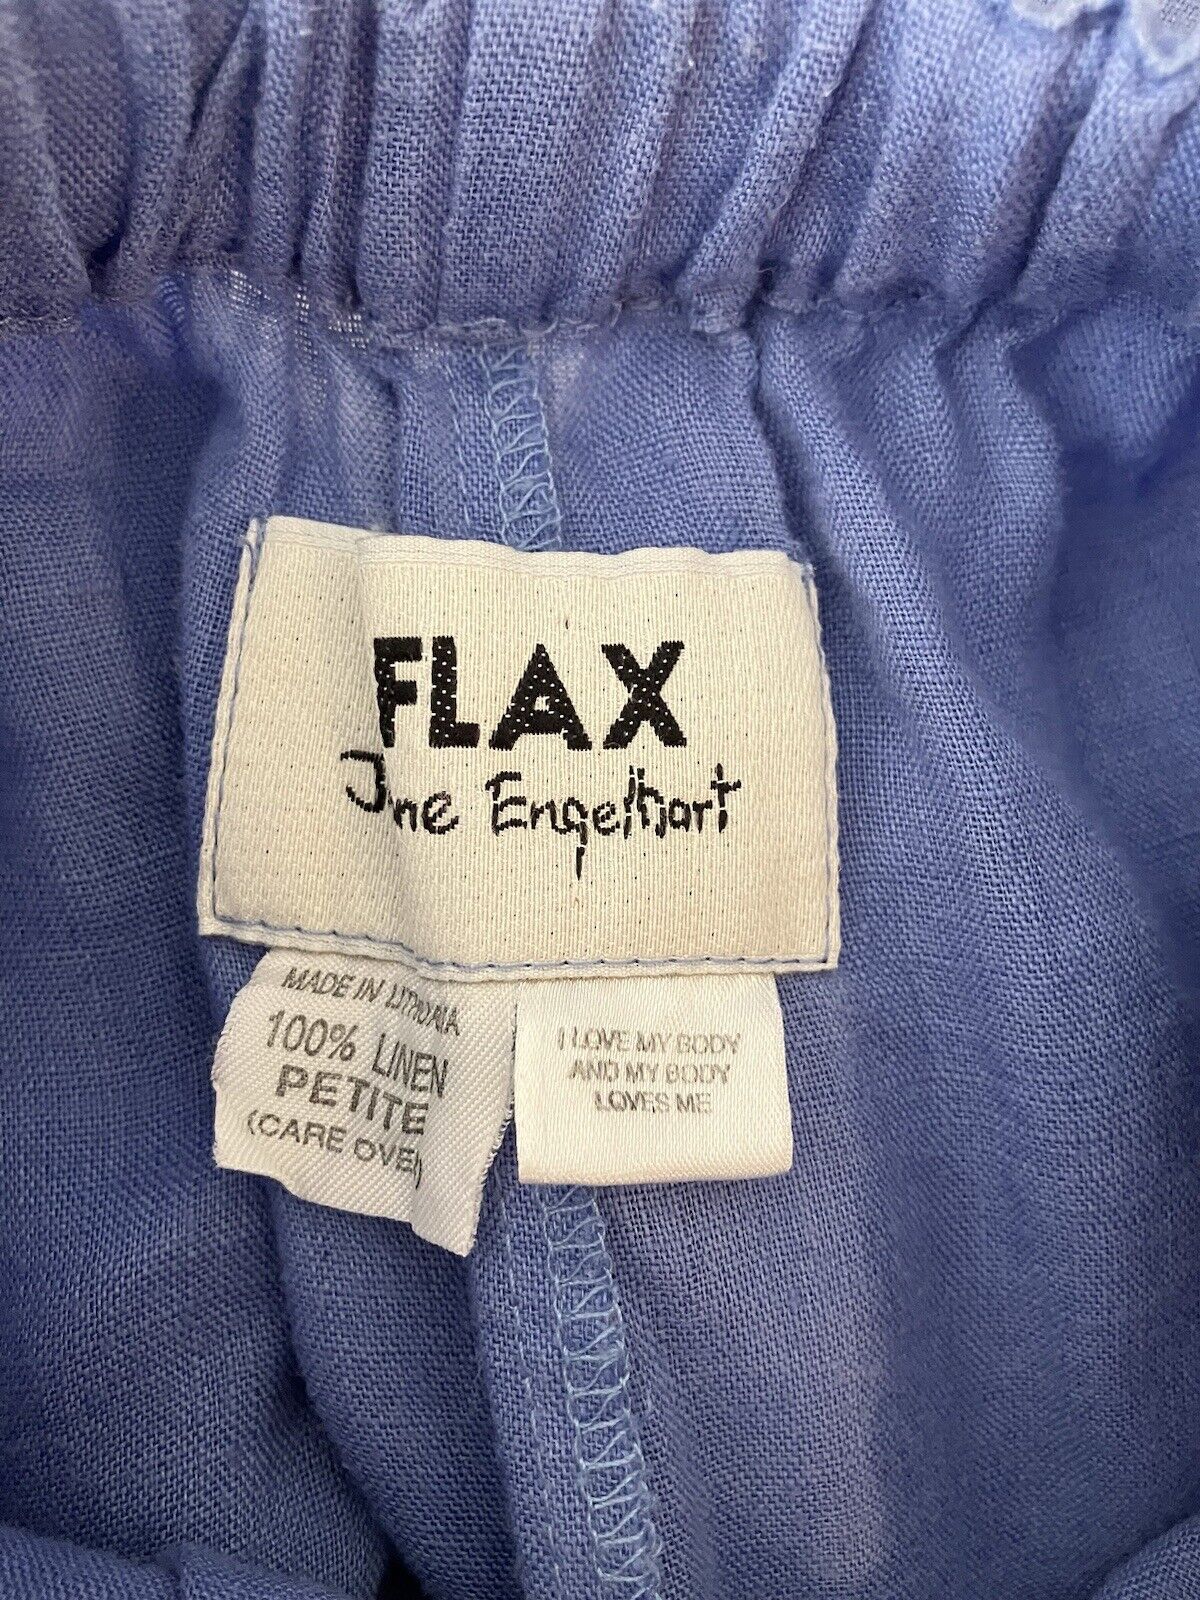 FLAX Jeanne Engelhart Blue Thin 100% Linen Vintag… - image 2